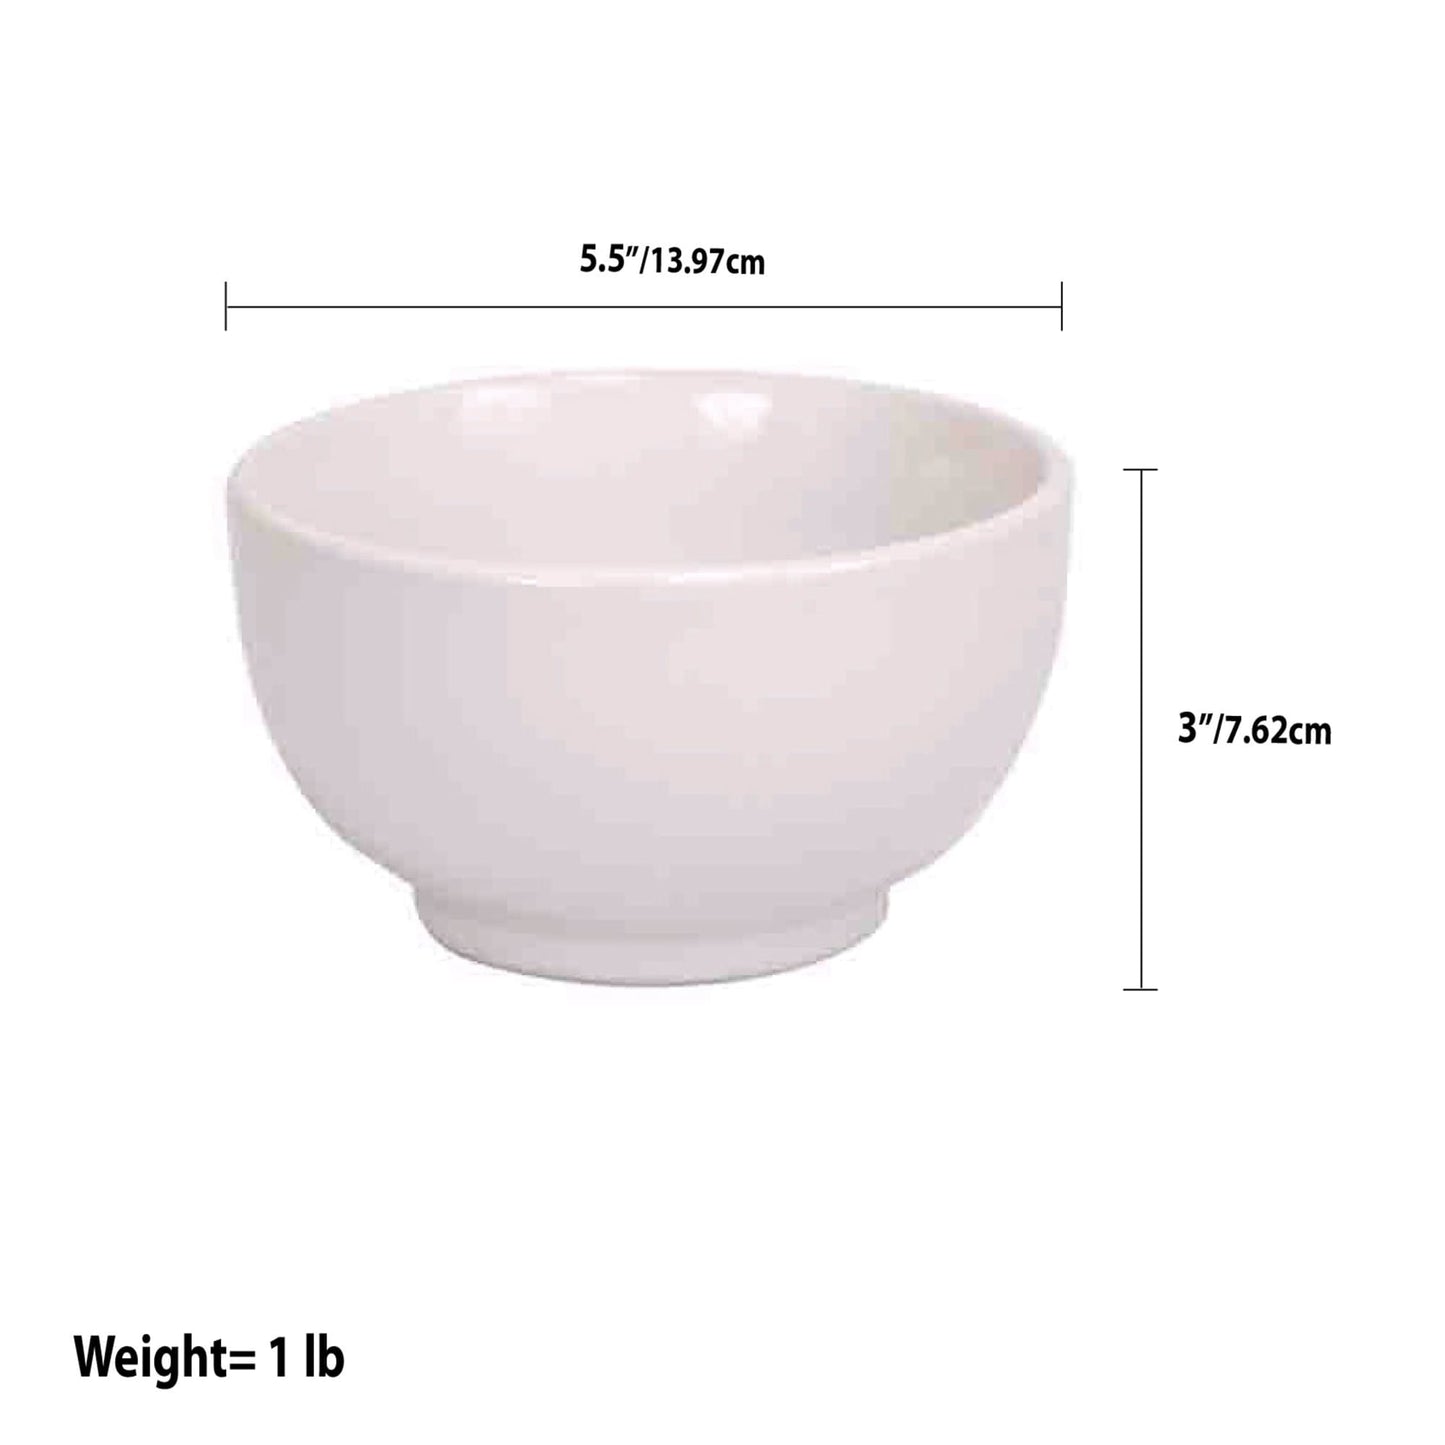 Ceramic Cereal Bowl, White